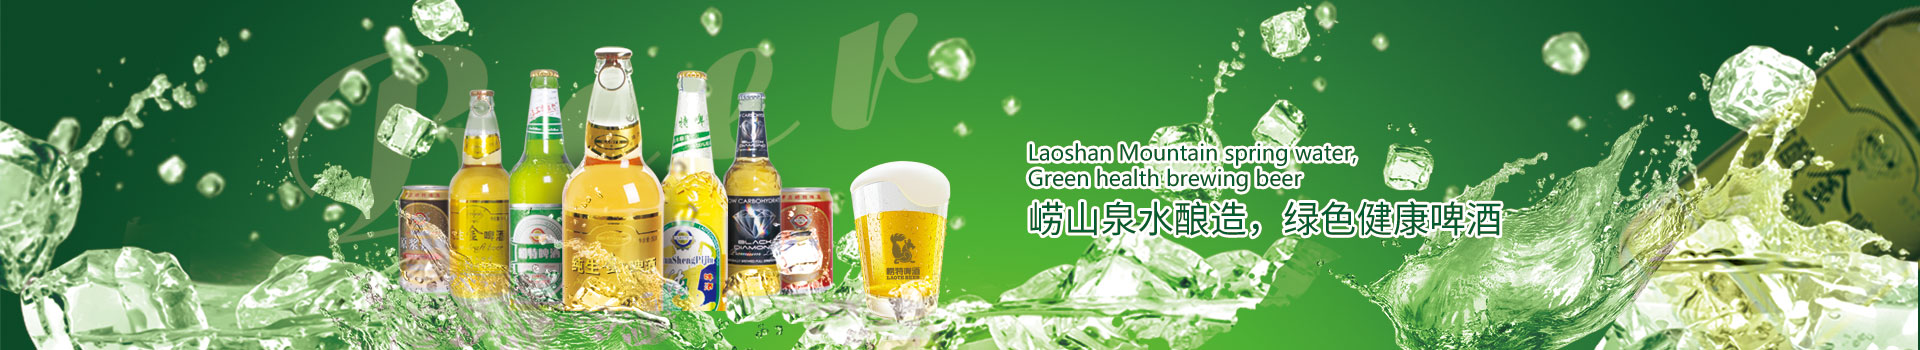 GA黄金甲-燕京啤酒金川公司荣获“国家级绿色工厂”称号